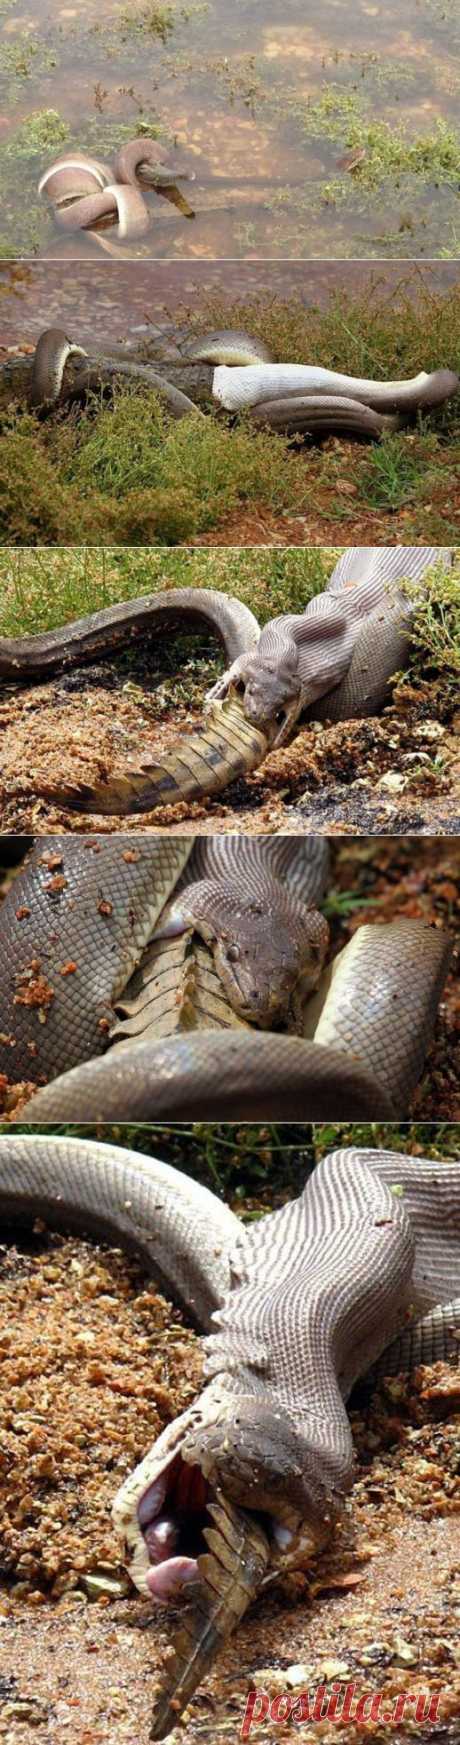 Змея пообедала крокодилом